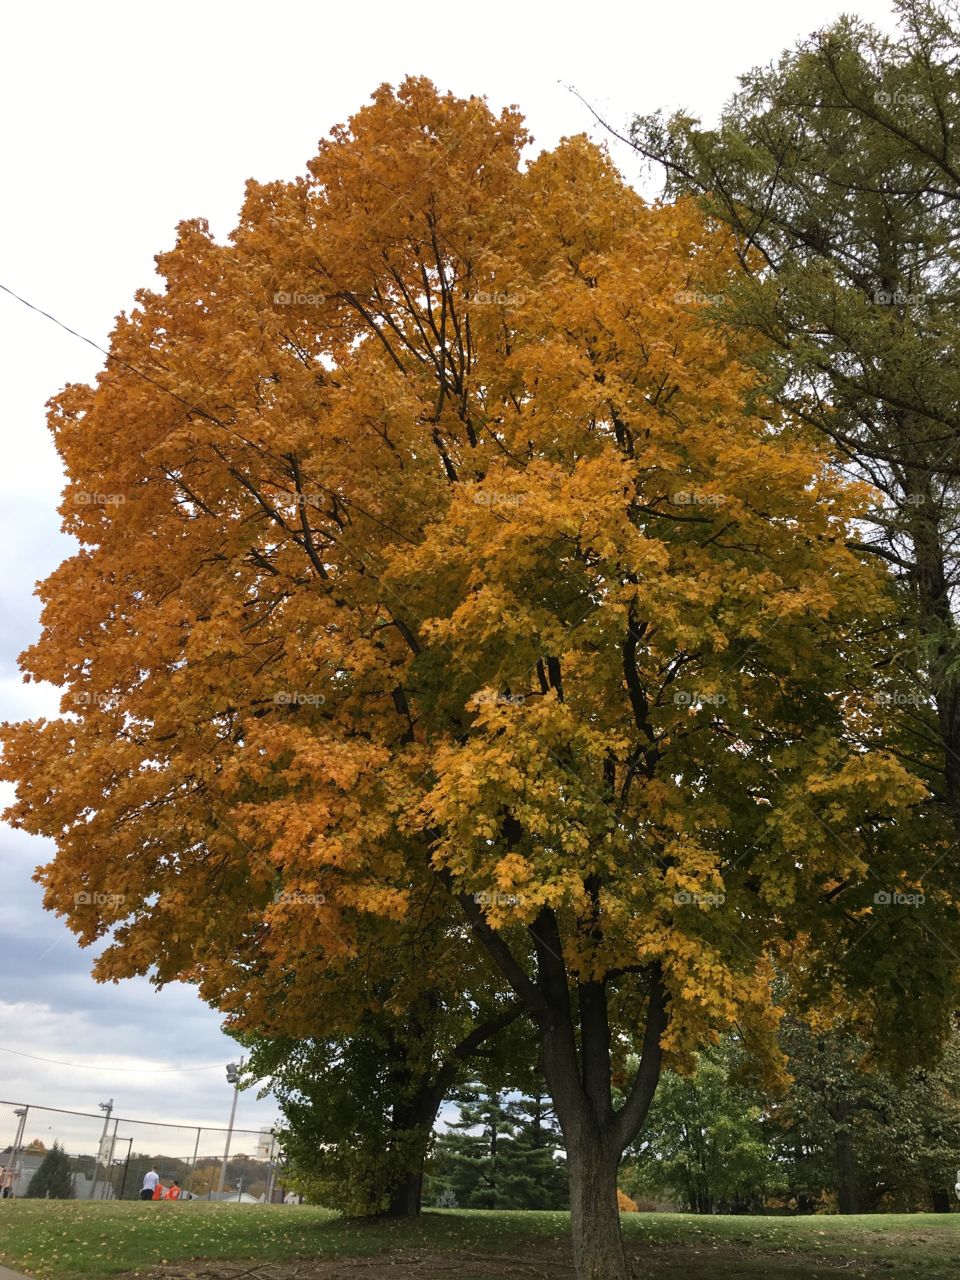 Fall Leaves 